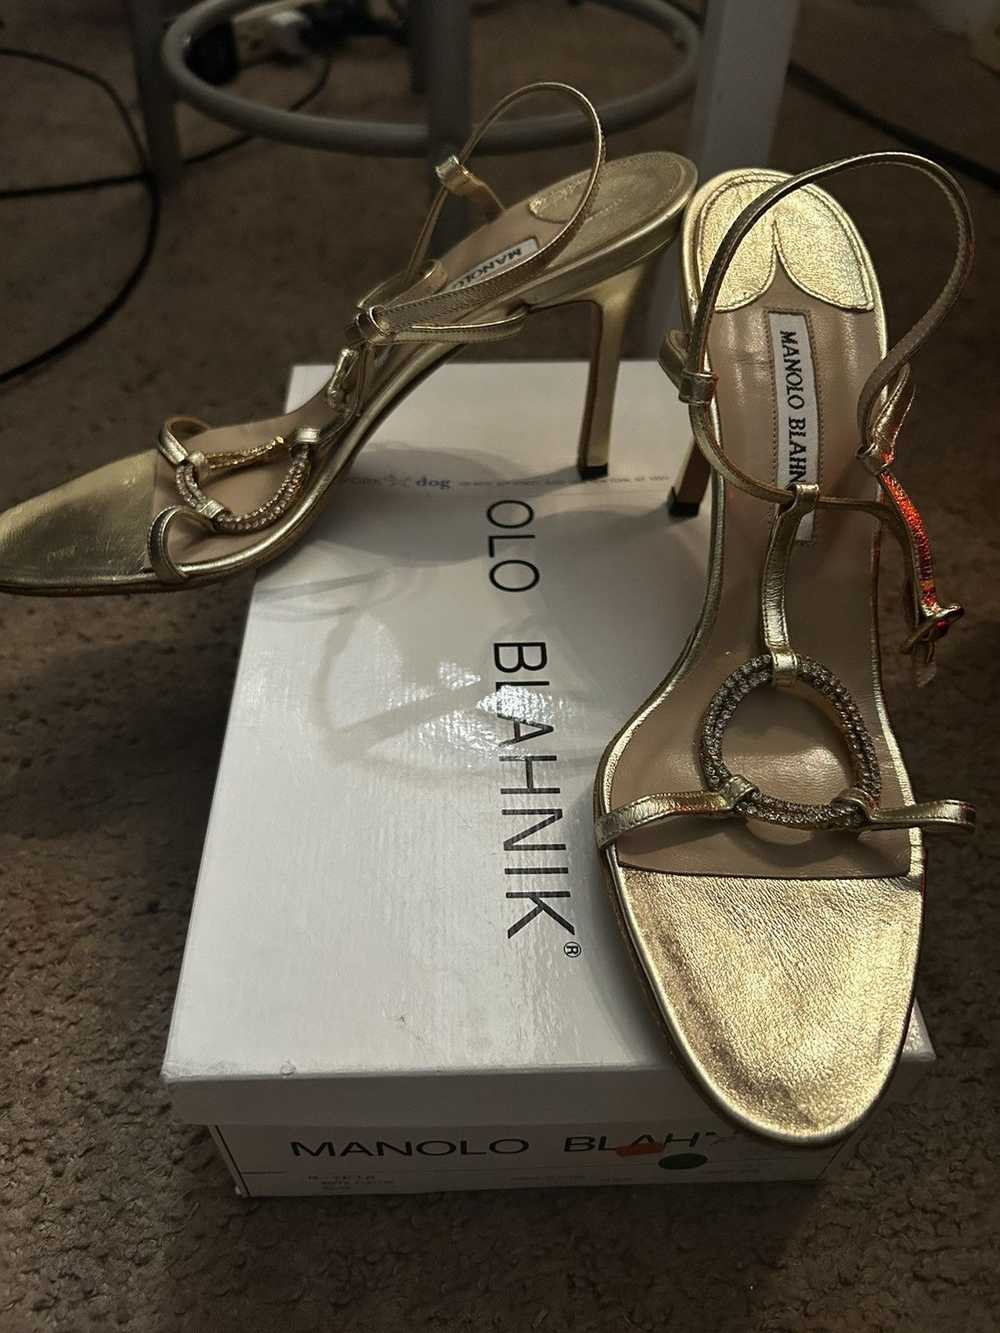 Manolo Blahnik manolo blahnik strappy sandal - image 2